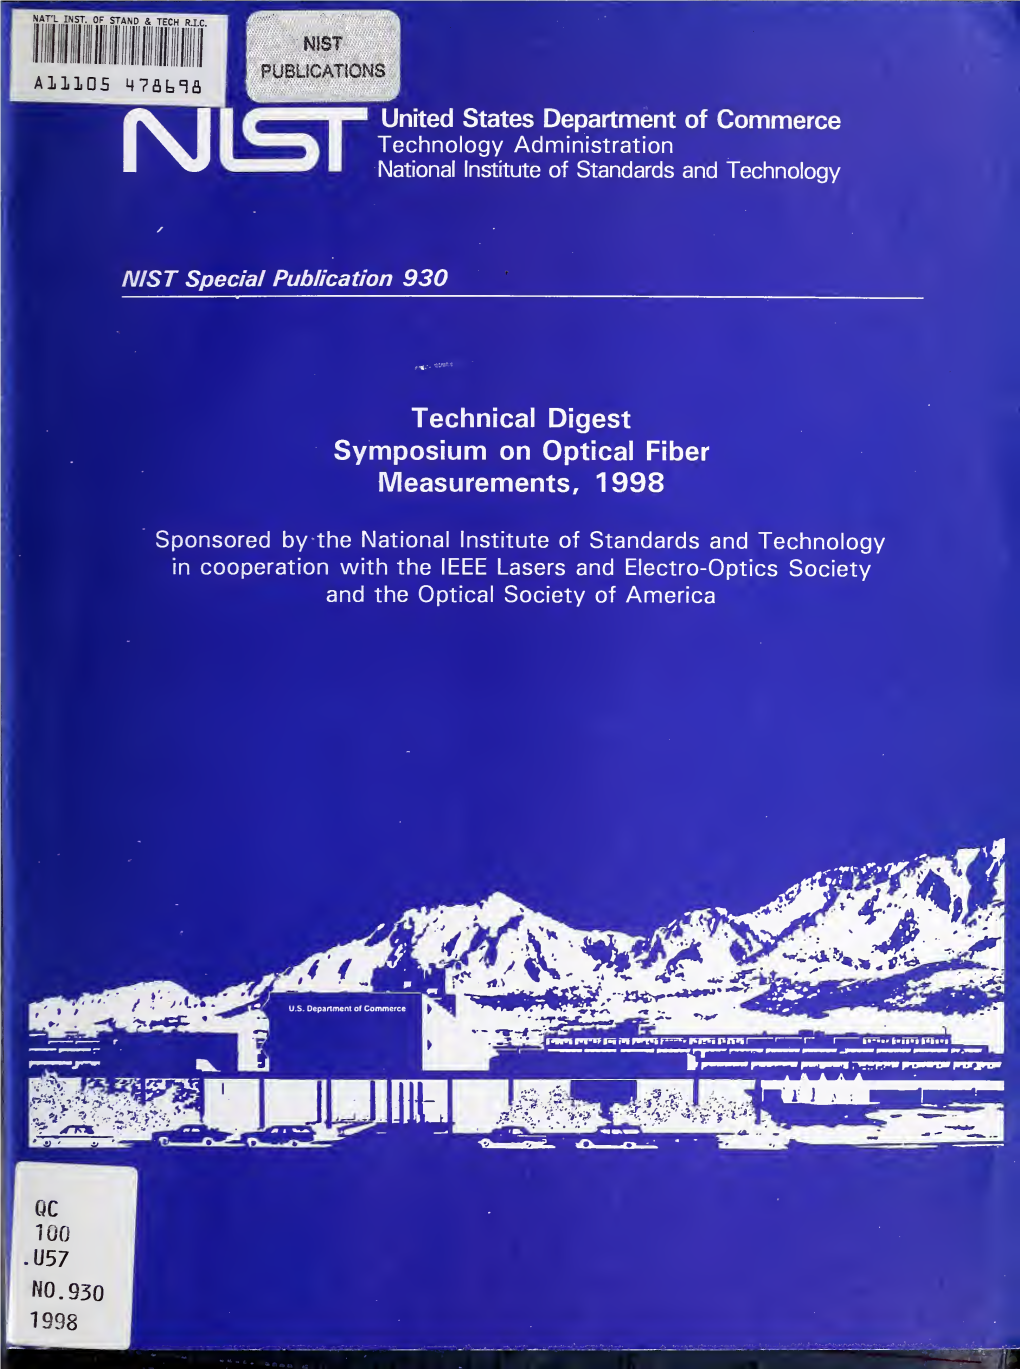 Technical Digest -- Symposium on Optical Fiber Measurements, 1998